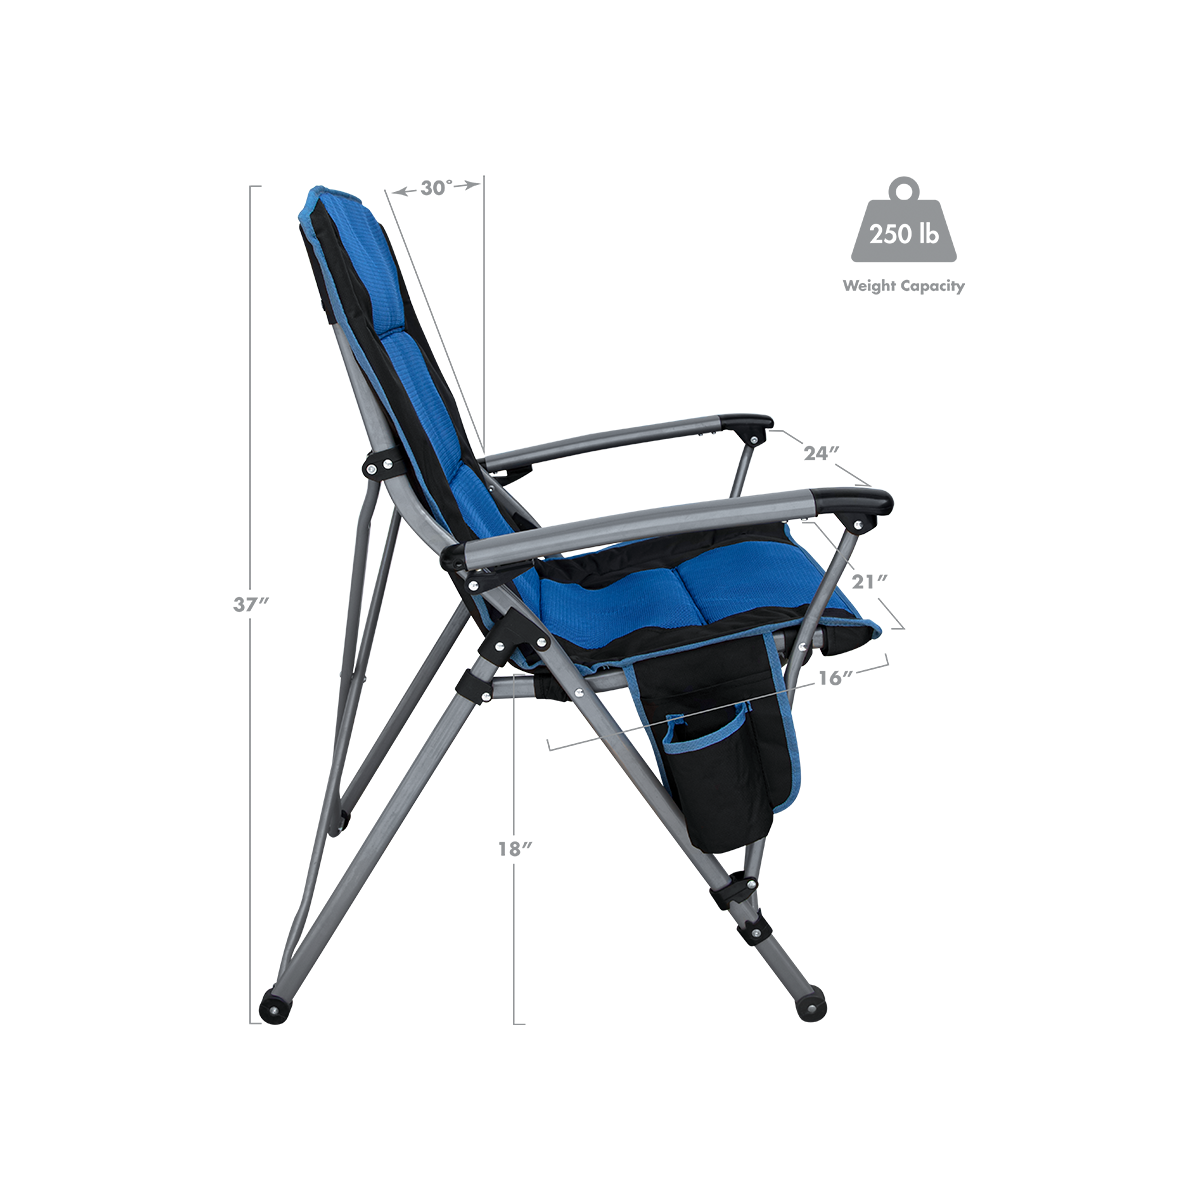 AllSport™ Outdoor Folding Chair